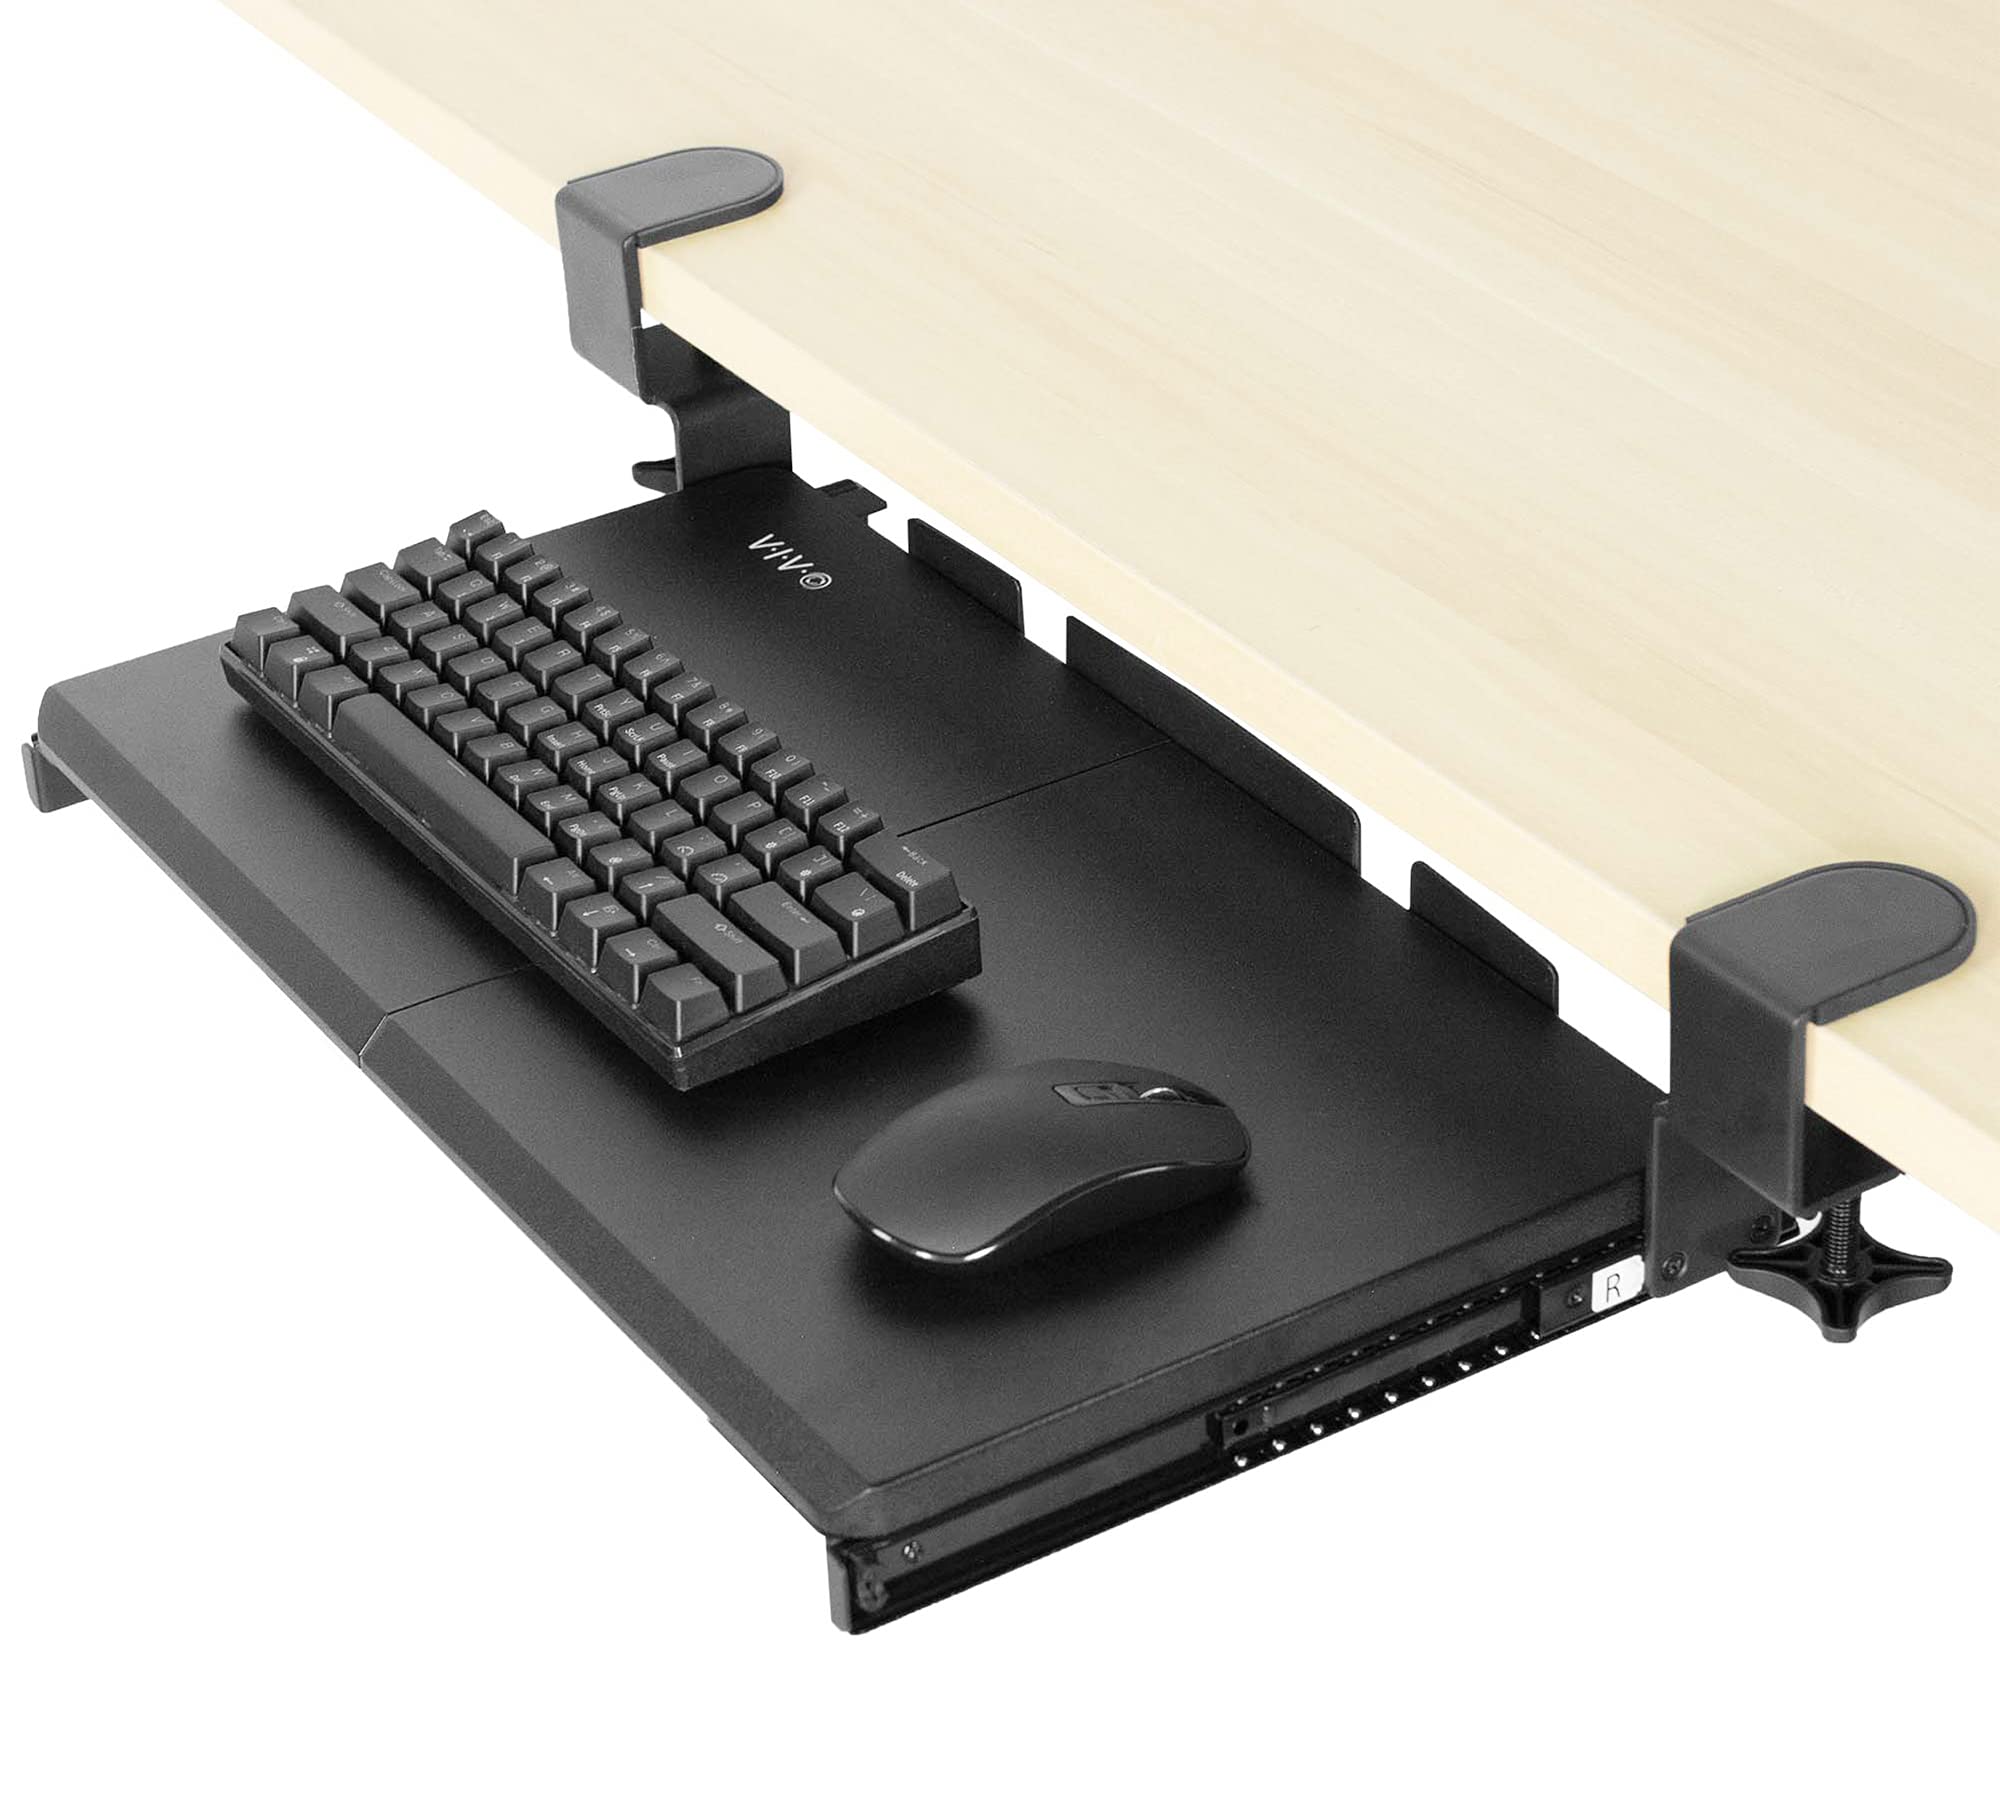 VIVO 매우 견고한 C 클램프 마운트 시스템을 갖춘 책상 밑의 키보드 트레이 풀아웃